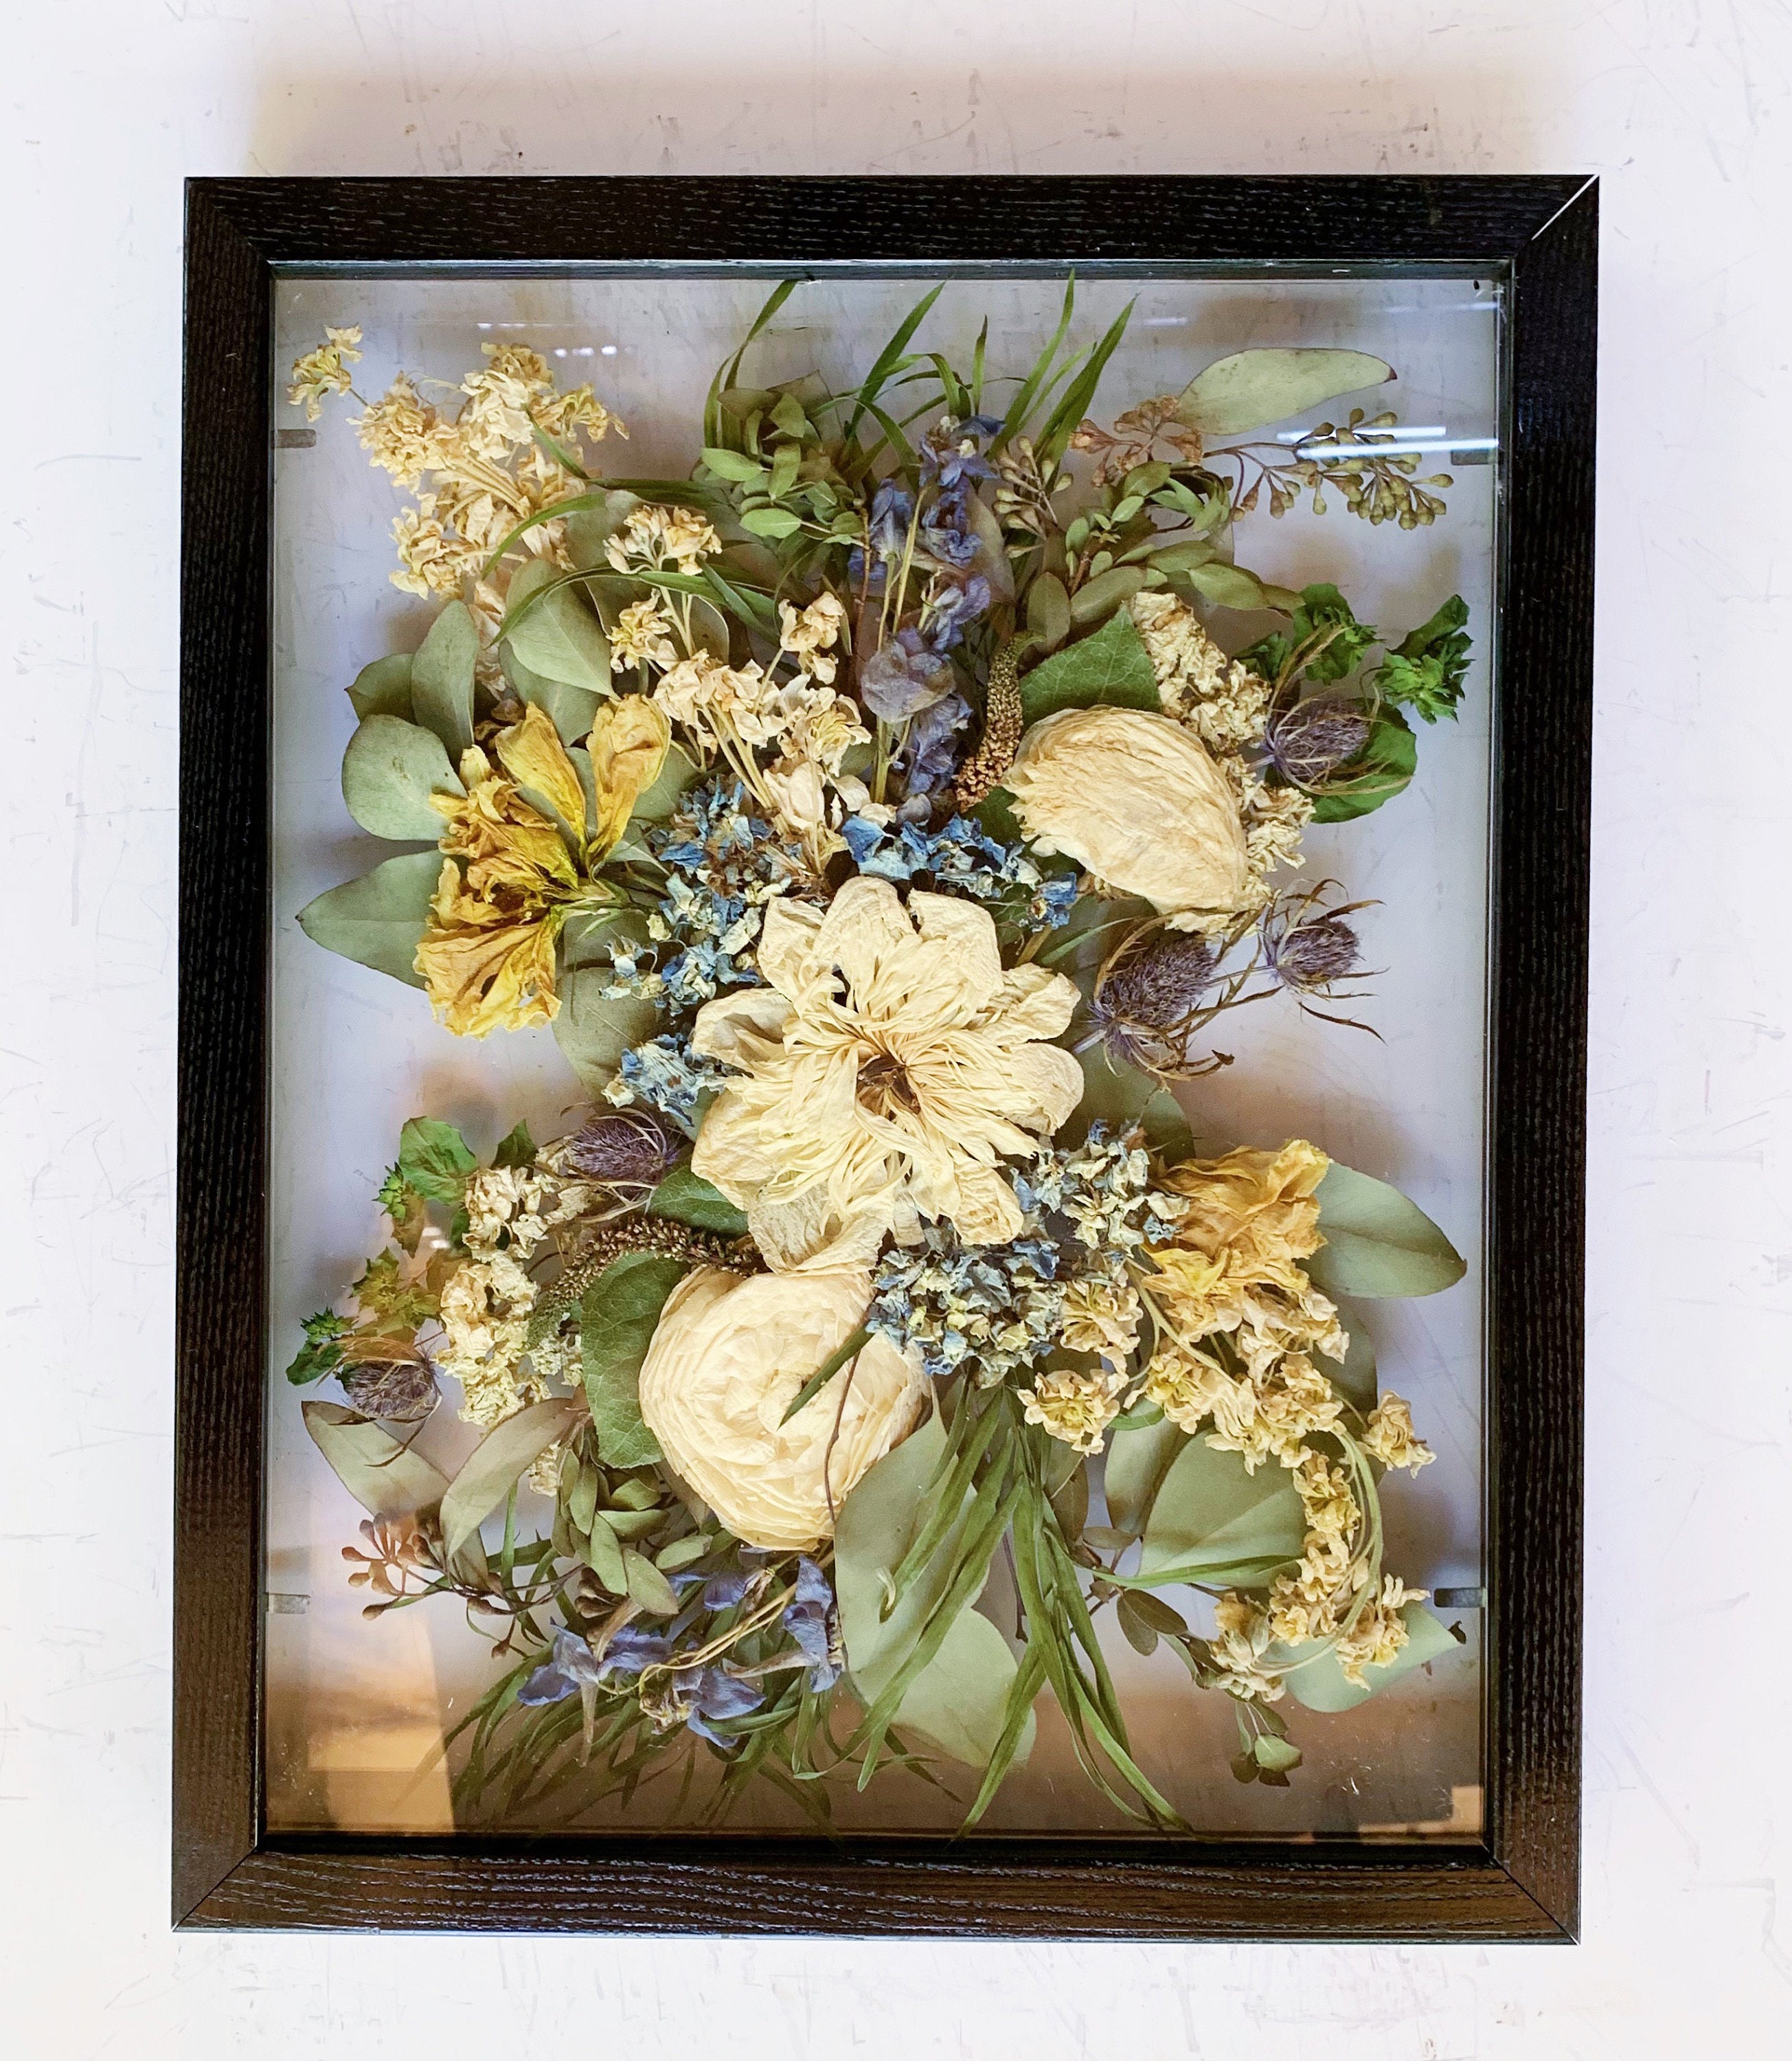 Wooden Dried Flower Photo Frame Dried Flower Display Stand Dry Flower  Shadow Box Specimen Shadow Case